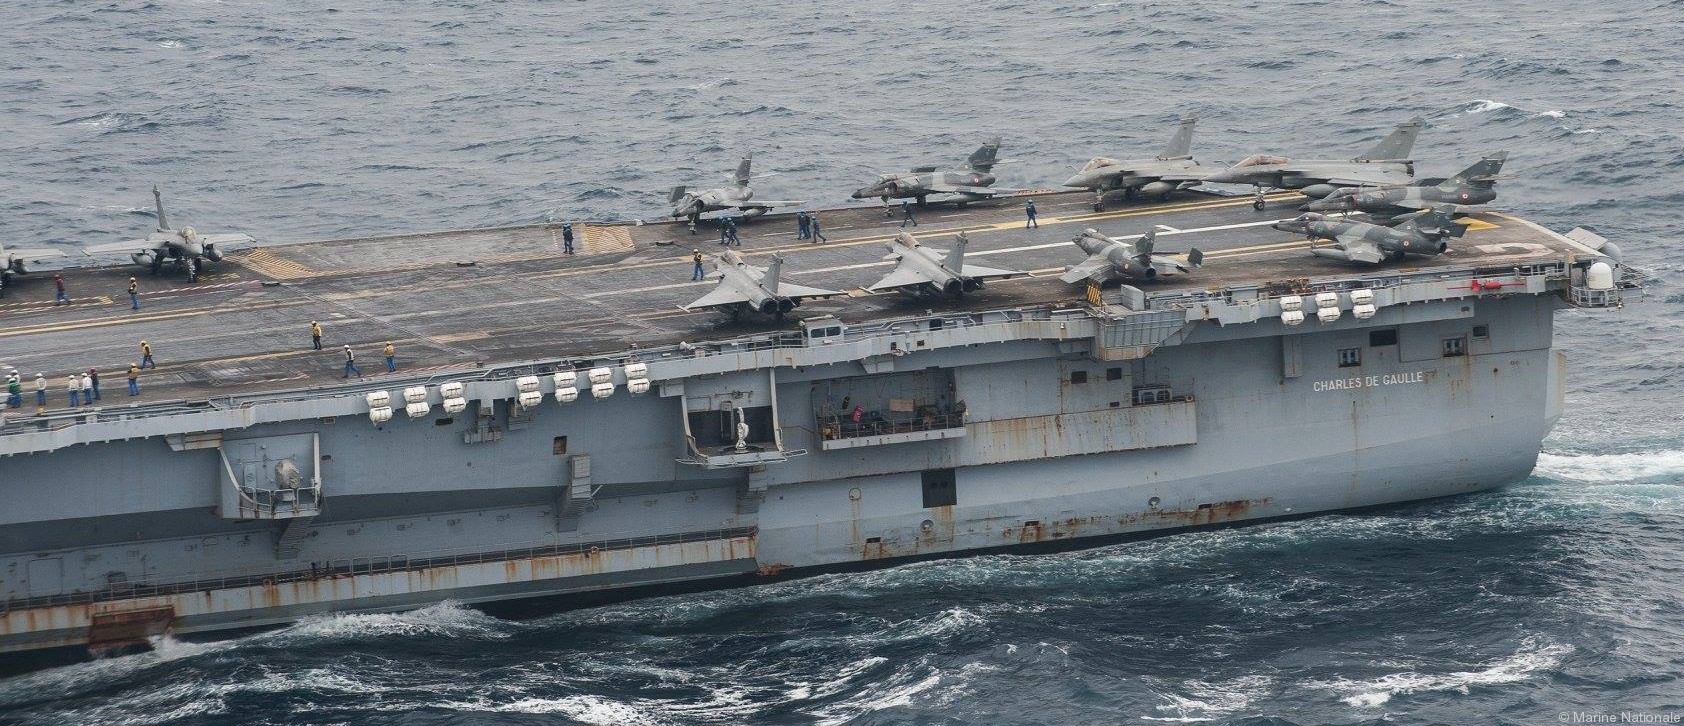  r-91 fs charles de gaulle aircraft carrier french navy 31 rafale super etendard